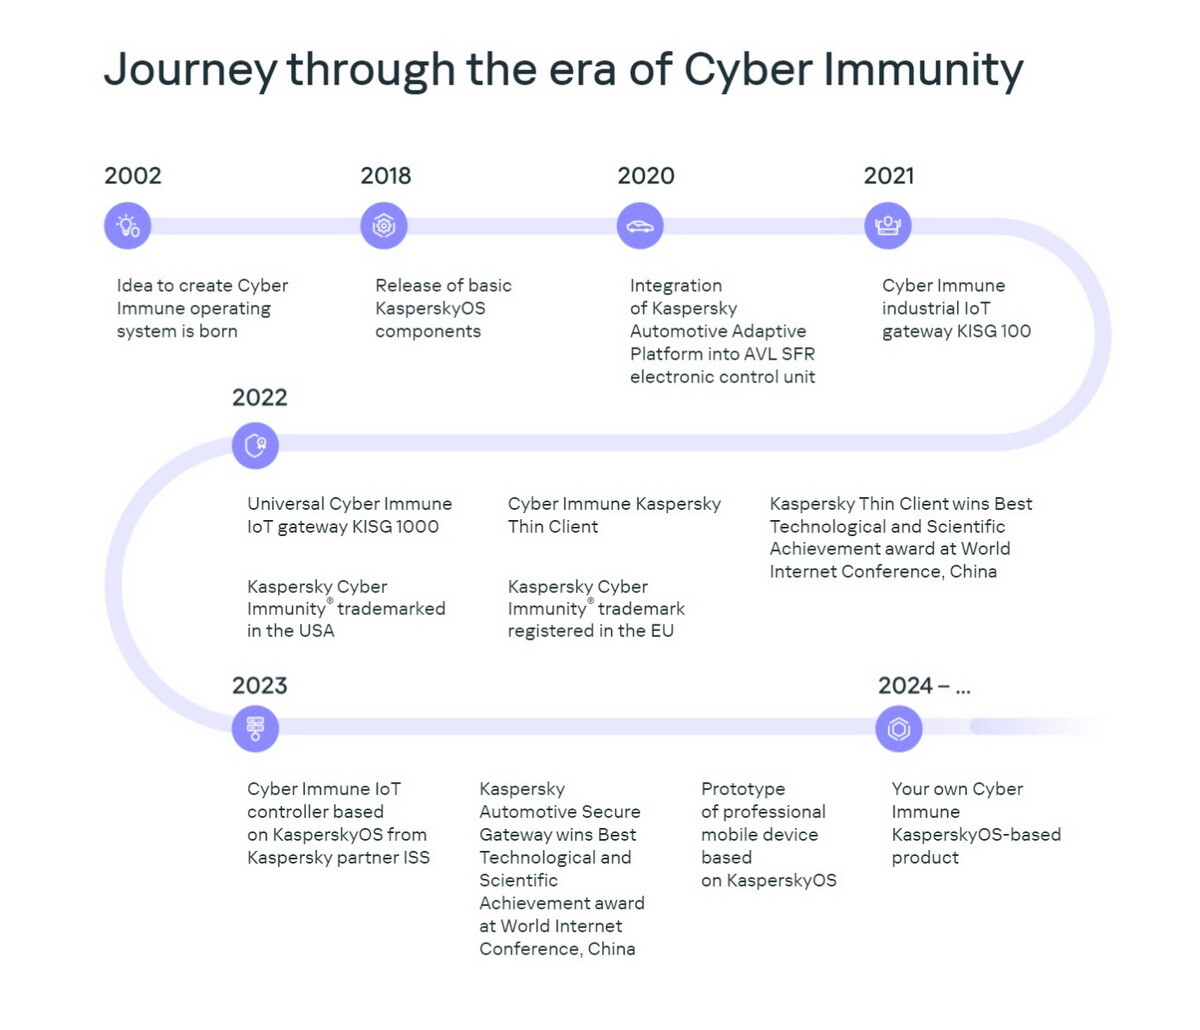 Innovation journey: Dubai welcomed Kaspersky's Cyber Immunity Conference